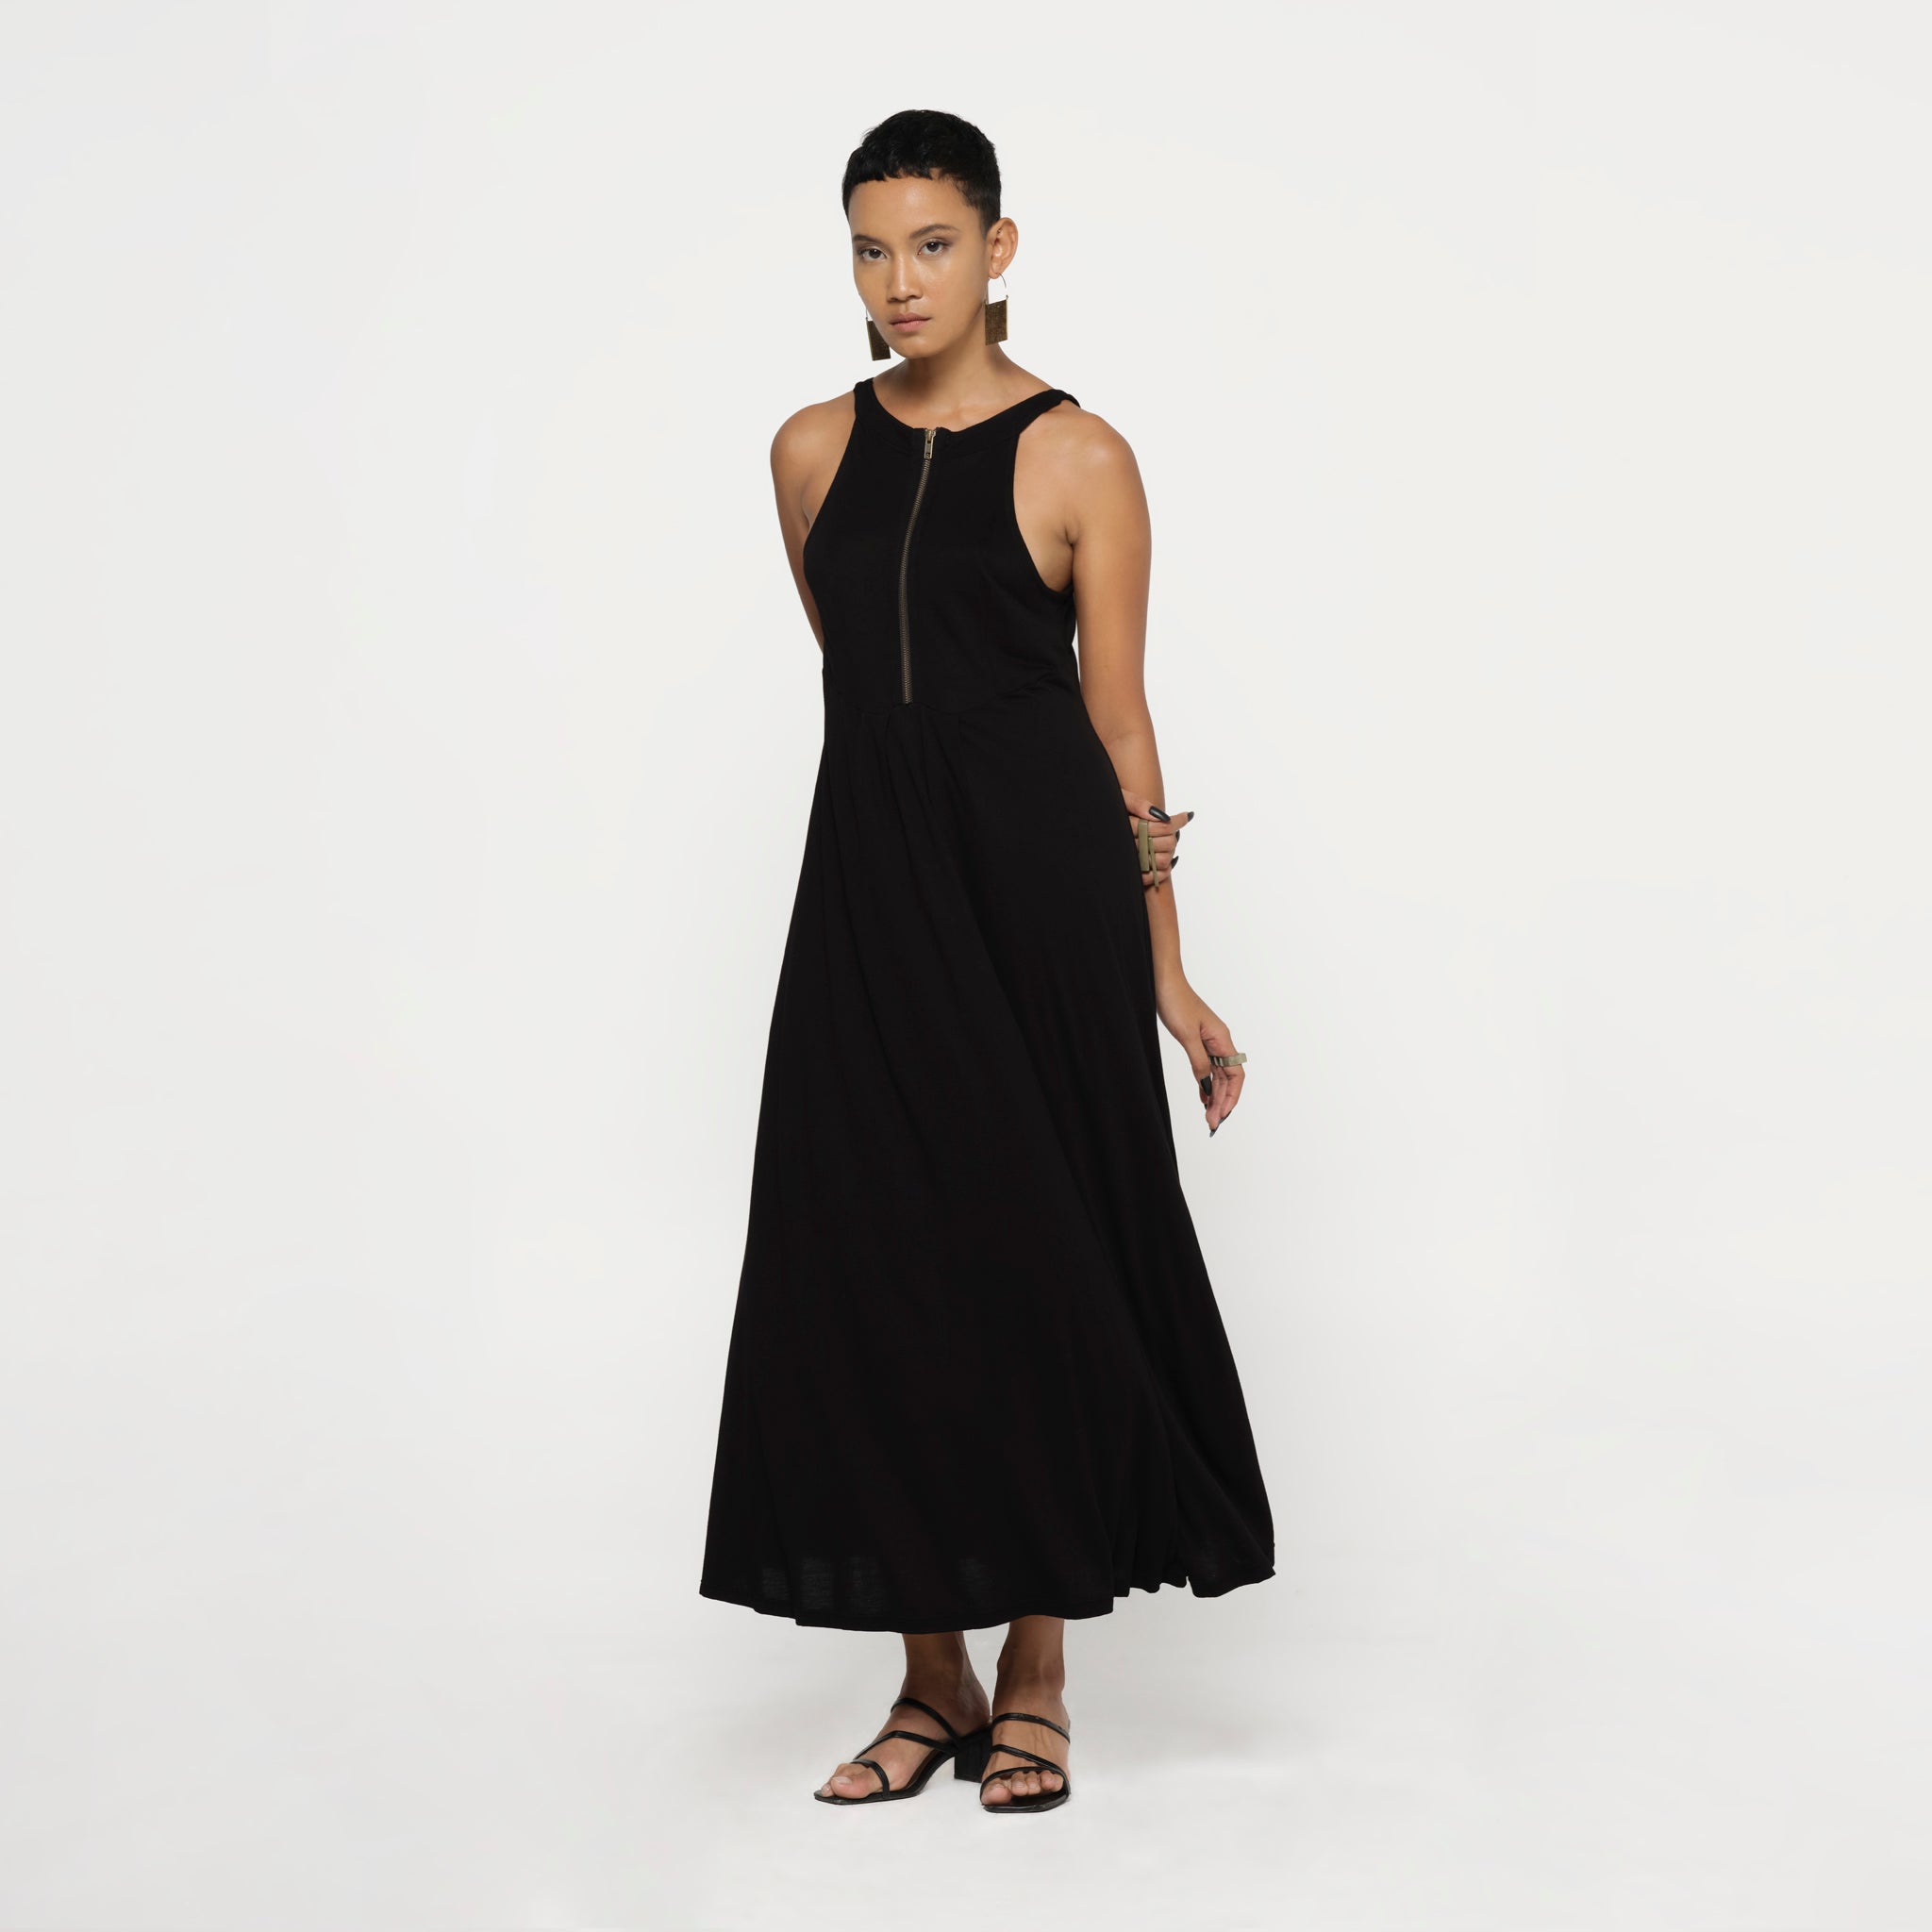 Zip Dress Black Bamboo Jersey